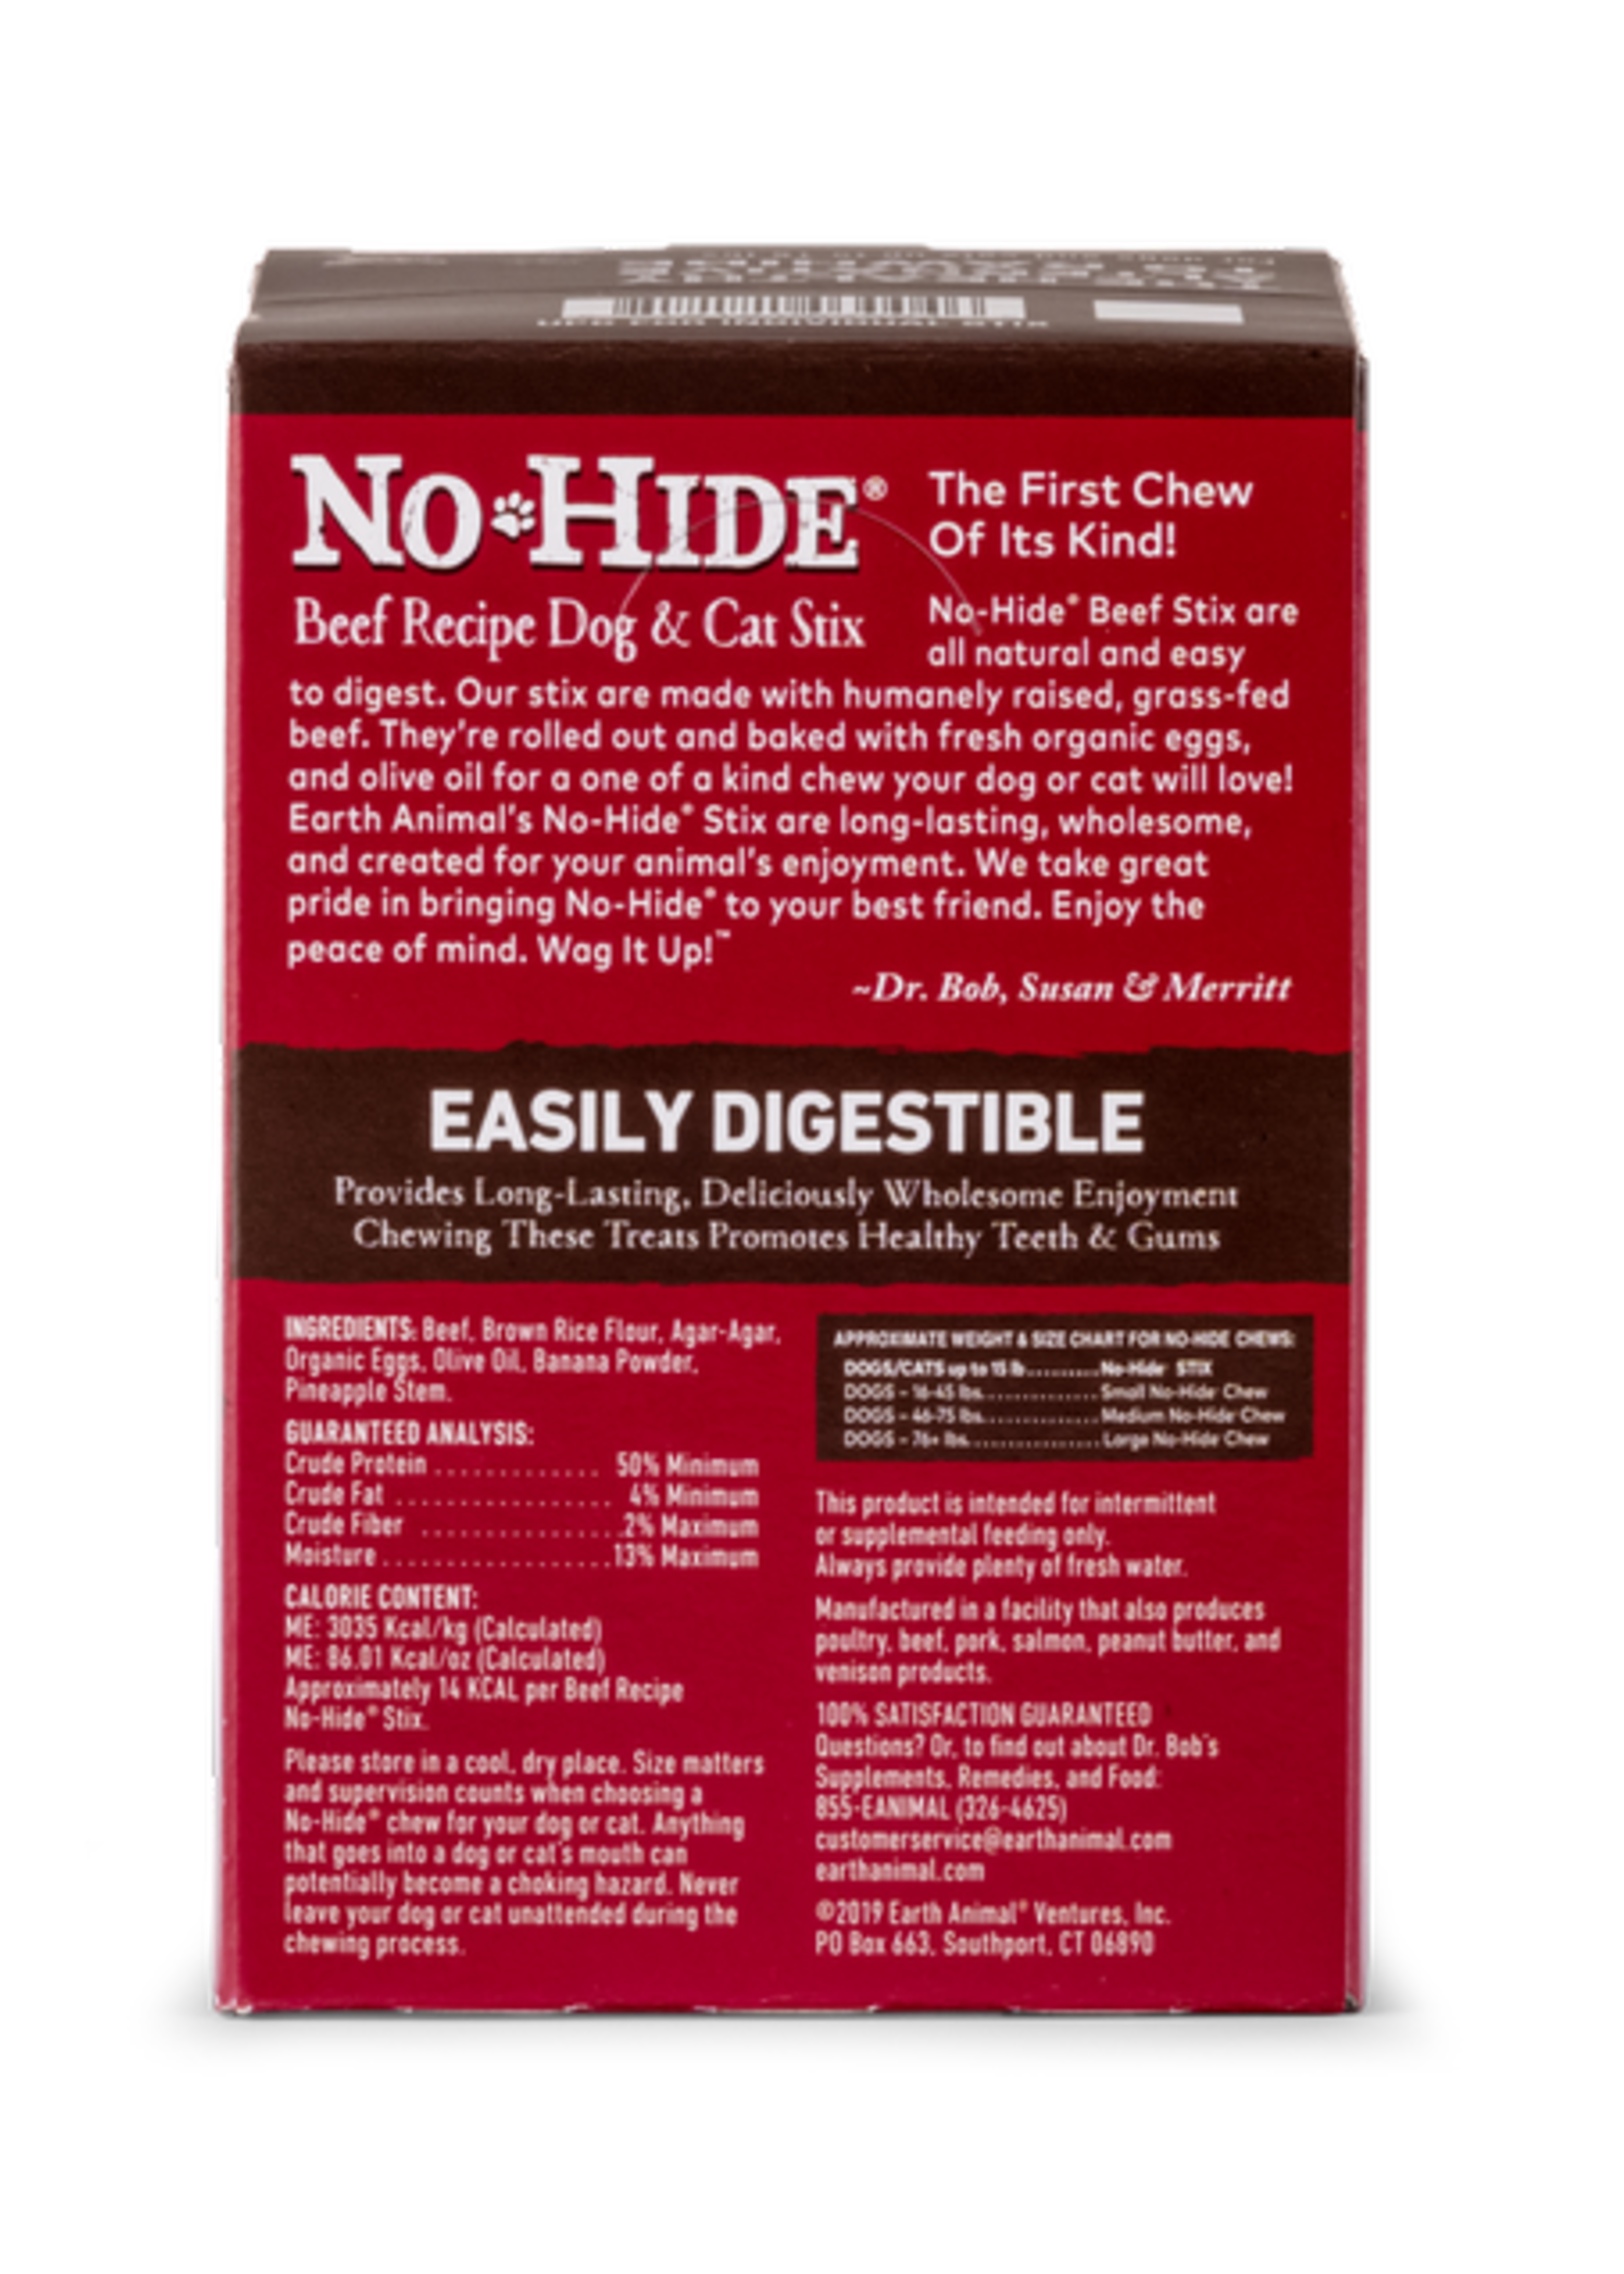 Earth Animal Earth Animal No-Hide Beef Chew Stix Single Dog & Cat Treats